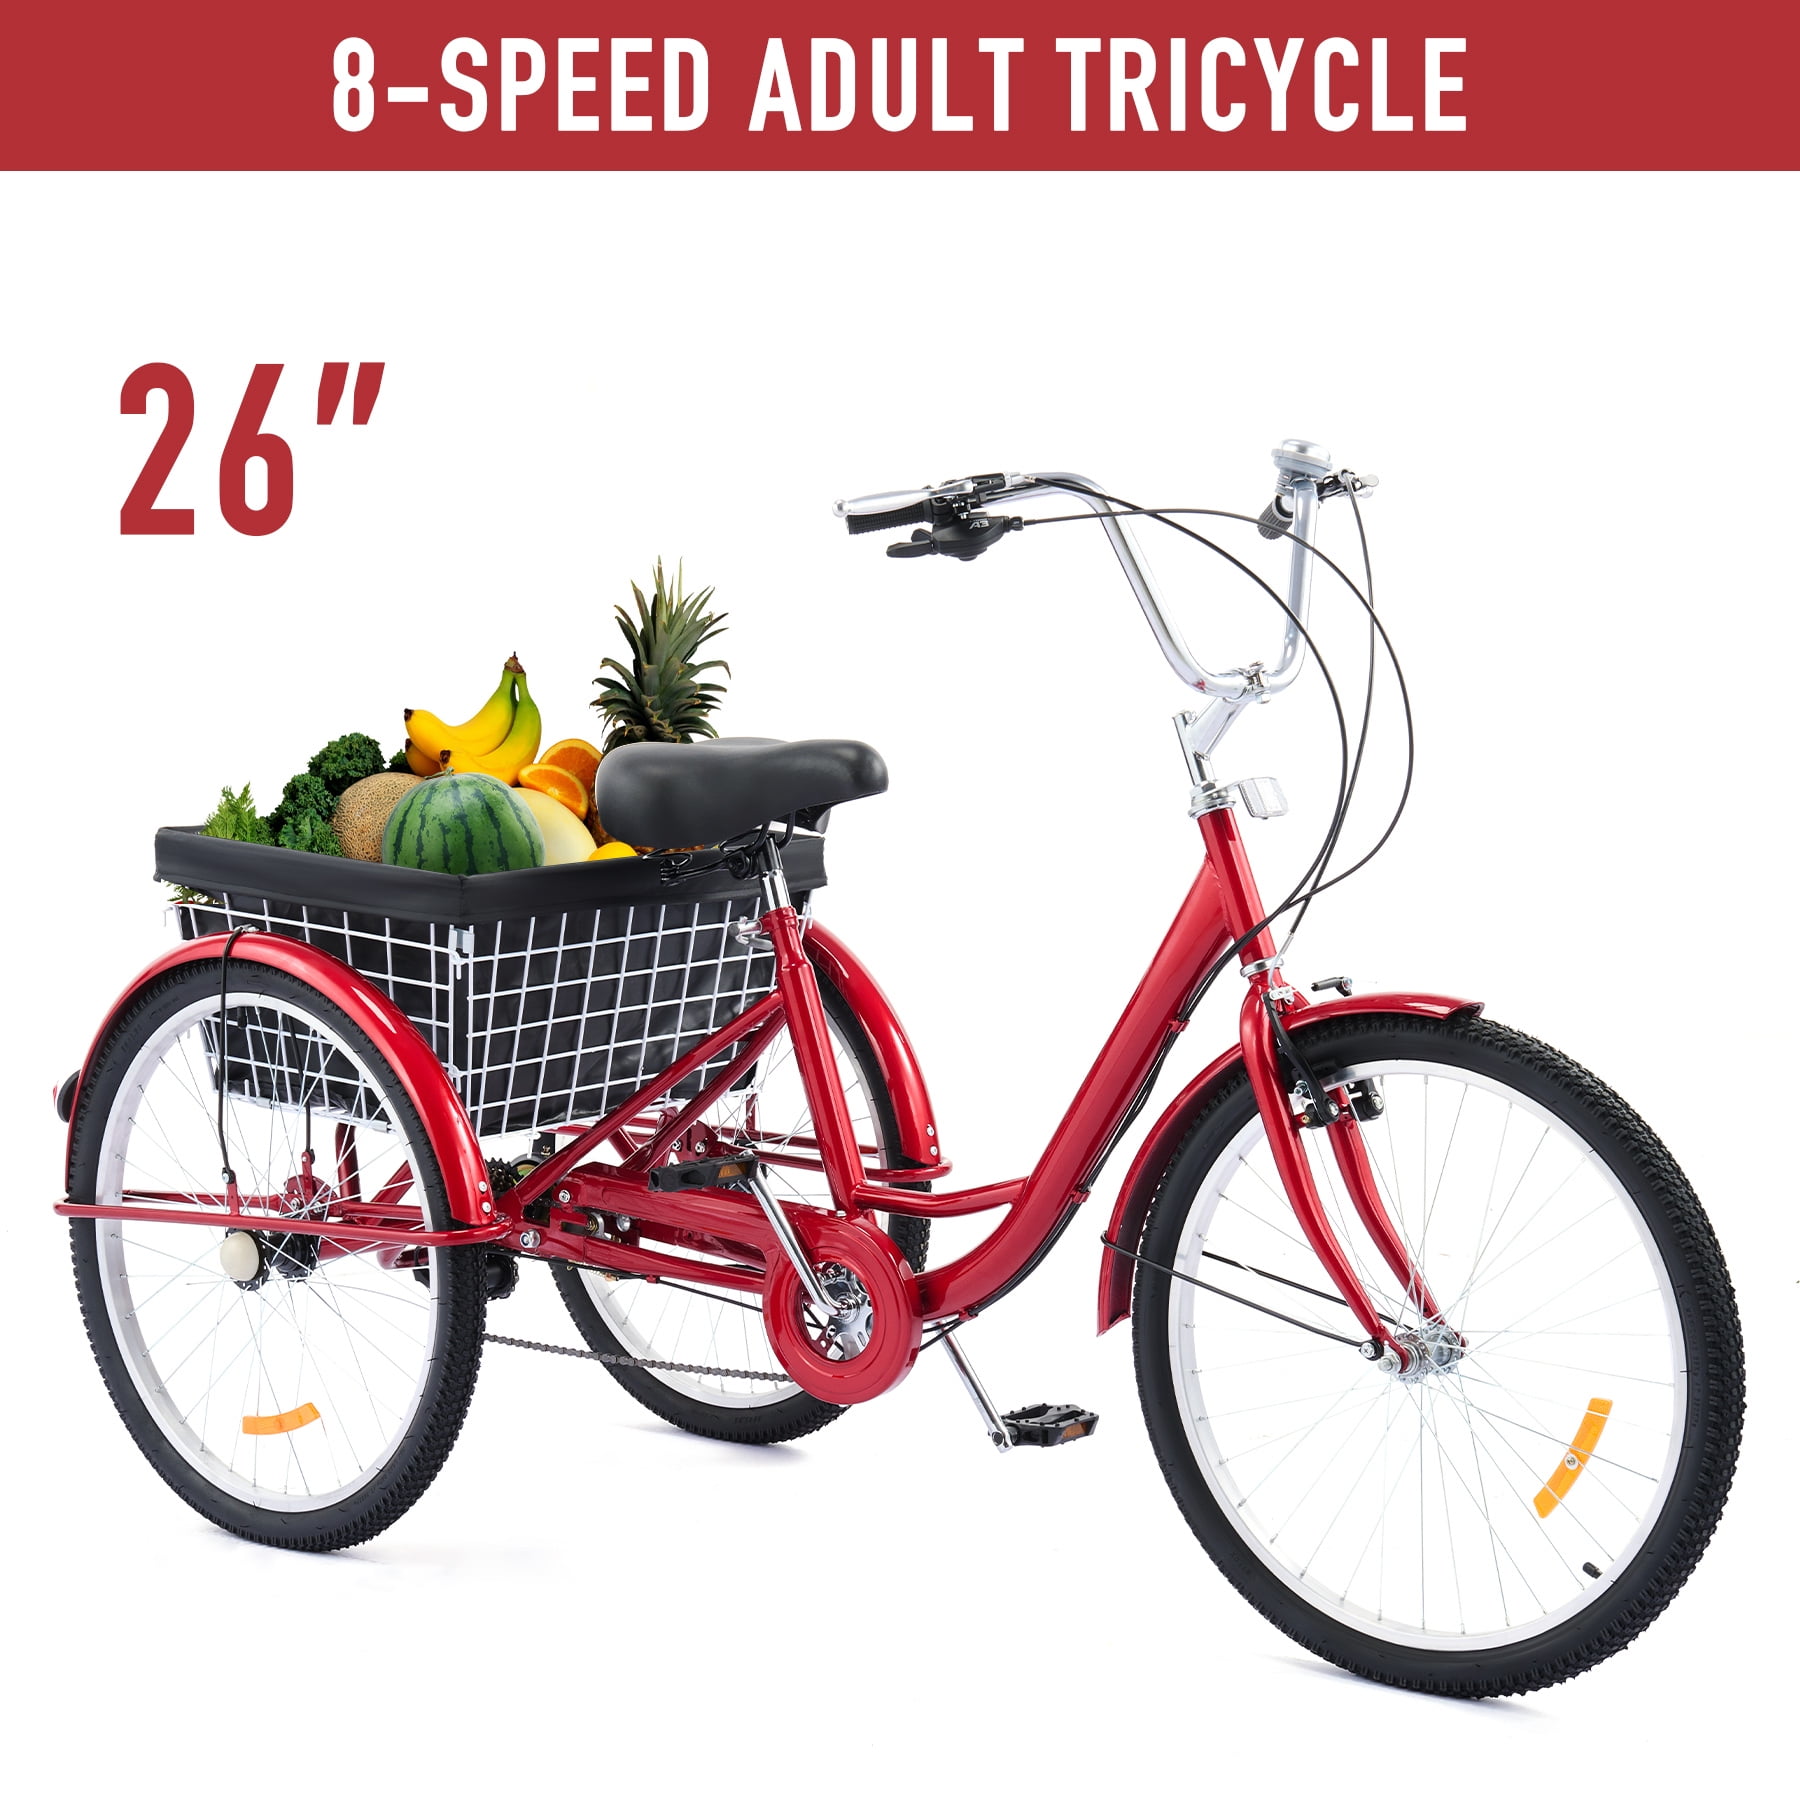 Adult Tricycle Bike 26" 3 Wheel Bicycle Basket Beach Cruiser Trike Ride Red New 